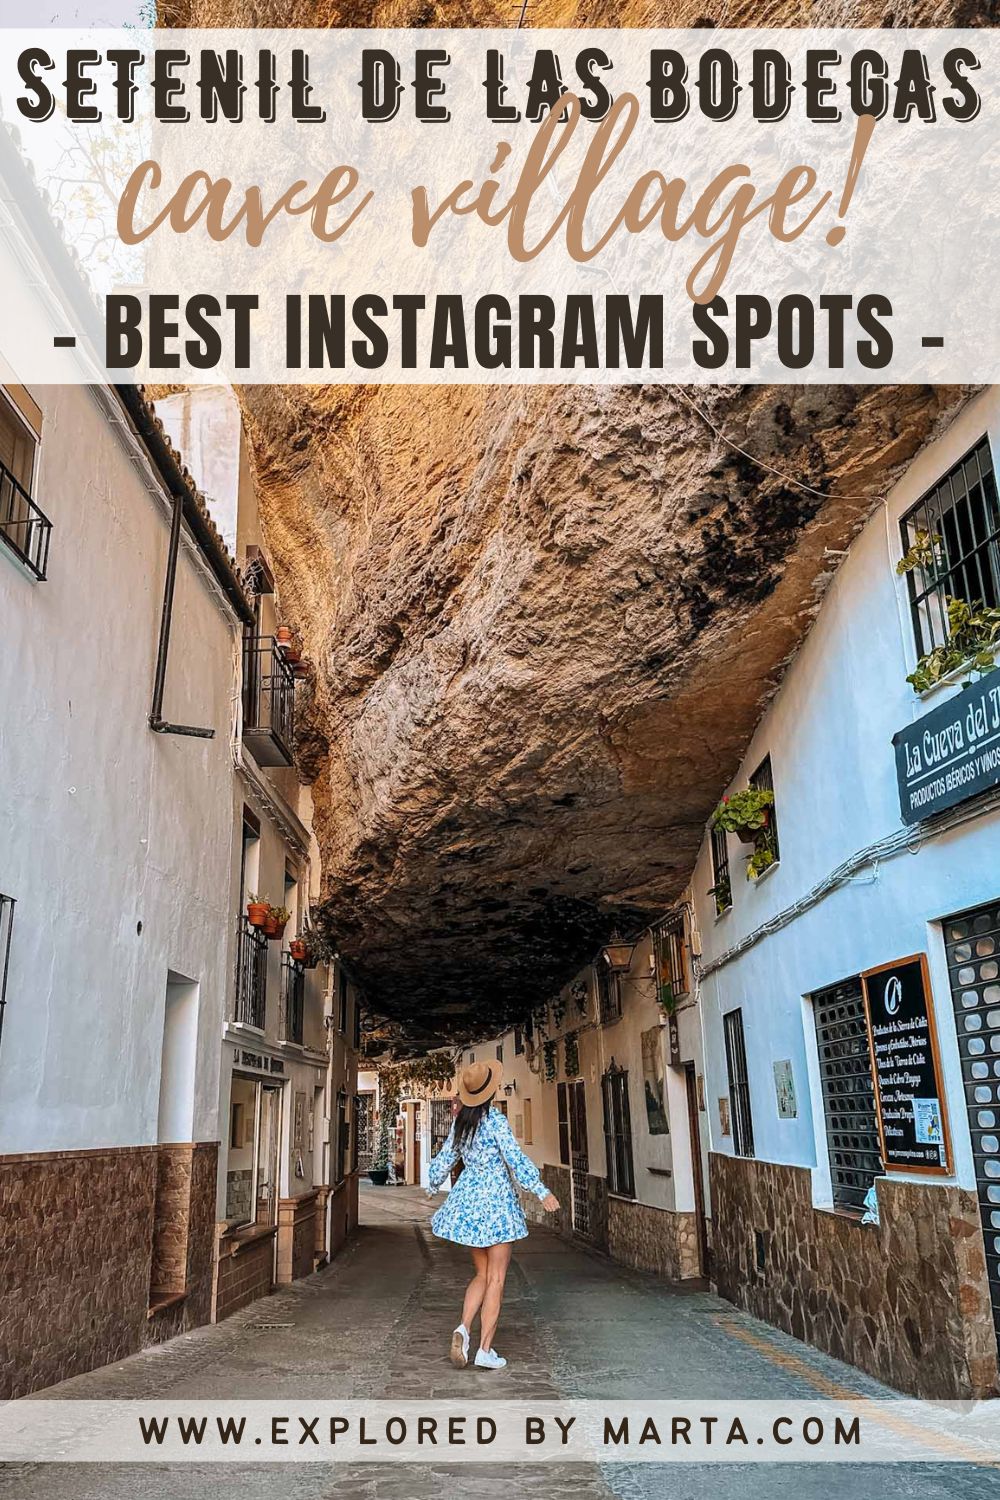 Setenil de las Bodegas - best Instagram spots in the cave village